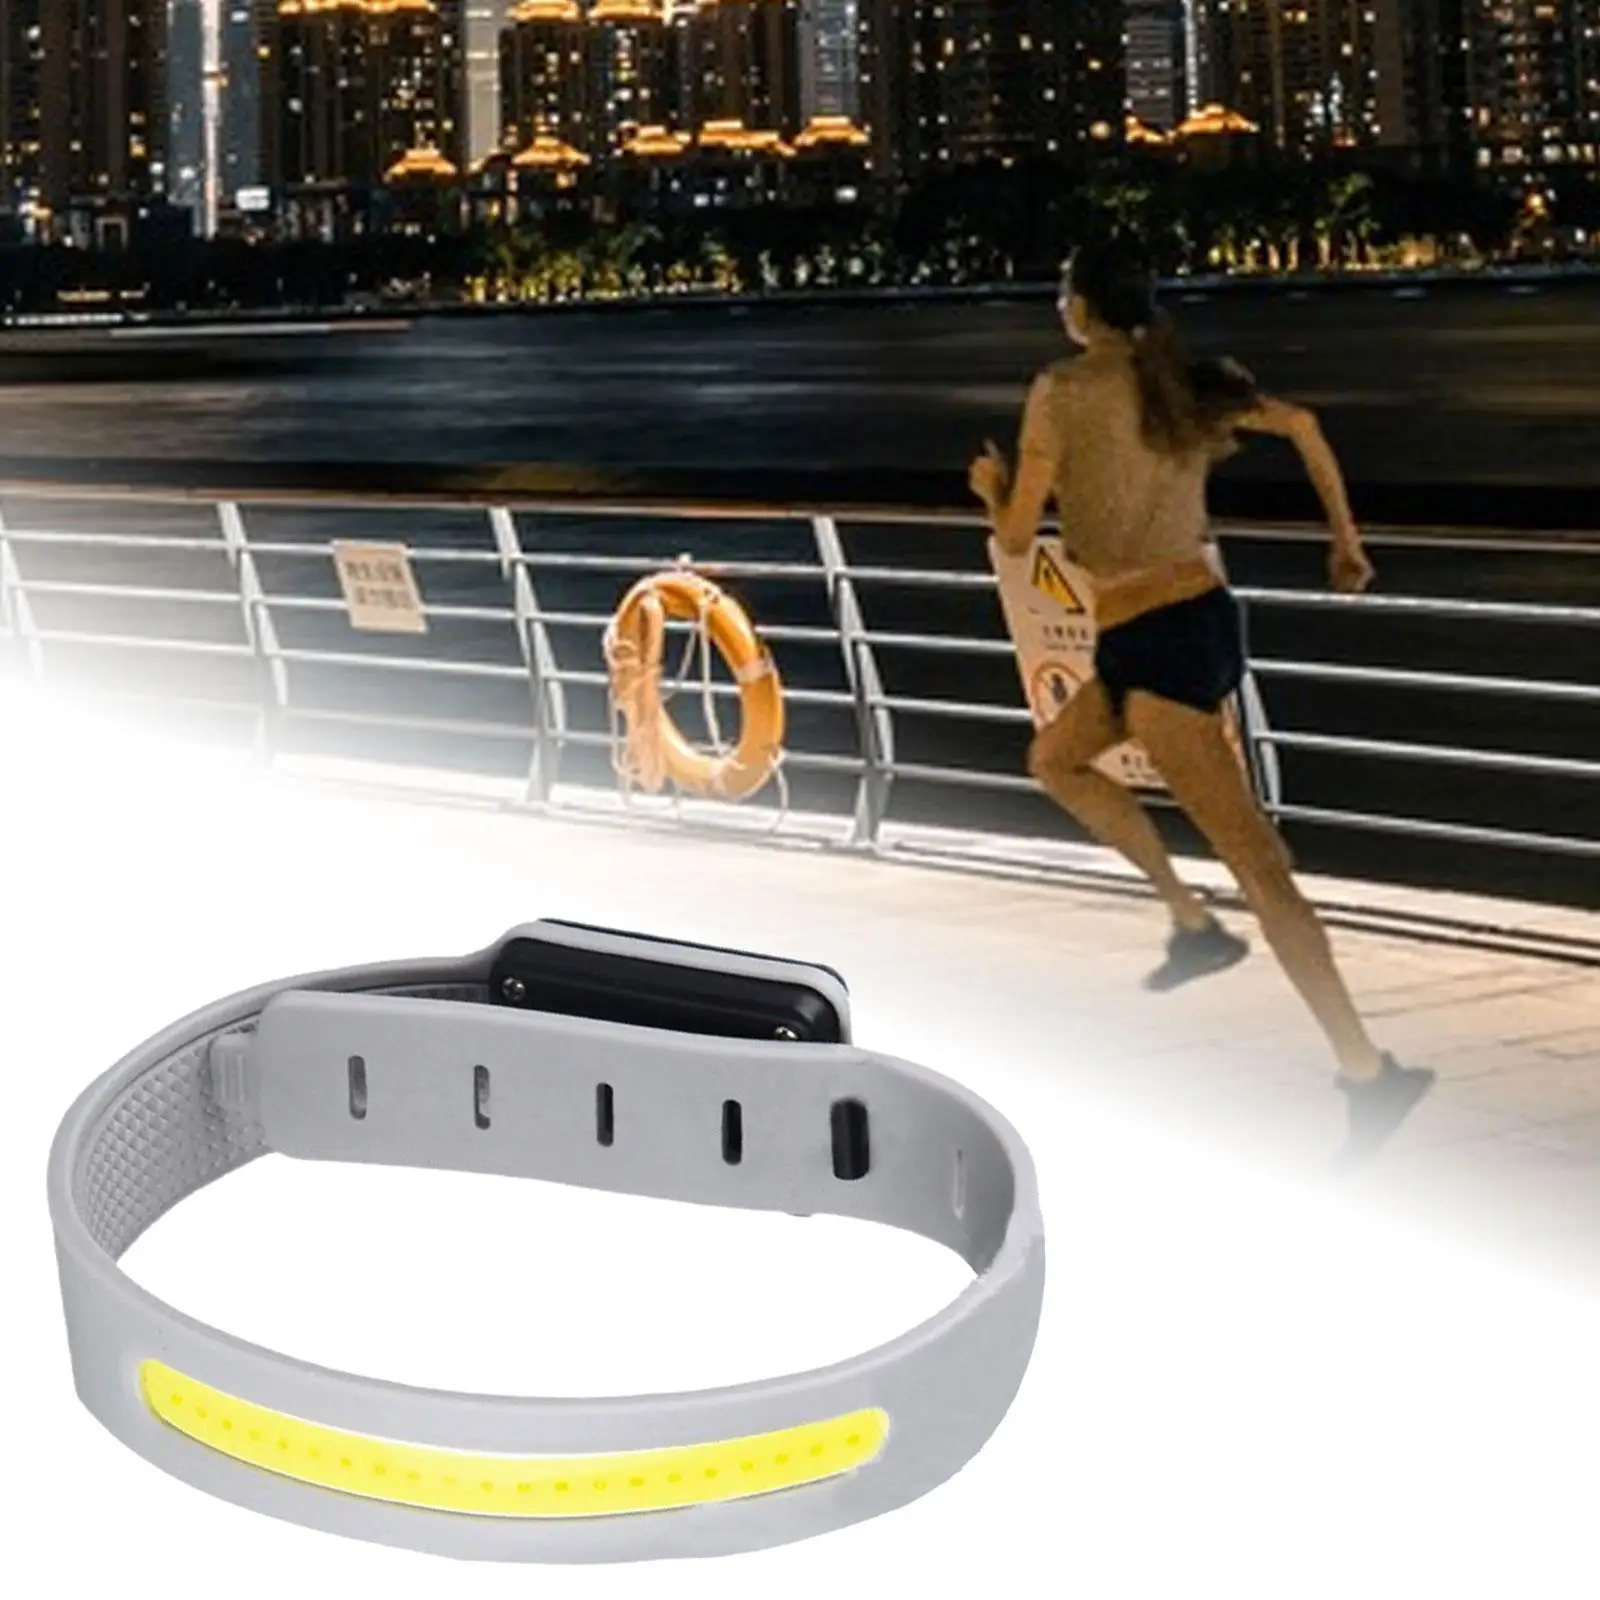 

Armband Light COB Waterproof Rechargeable Lightweight Comfortable Wristband Light for Dog Walking Biking Concert Camping Hiking